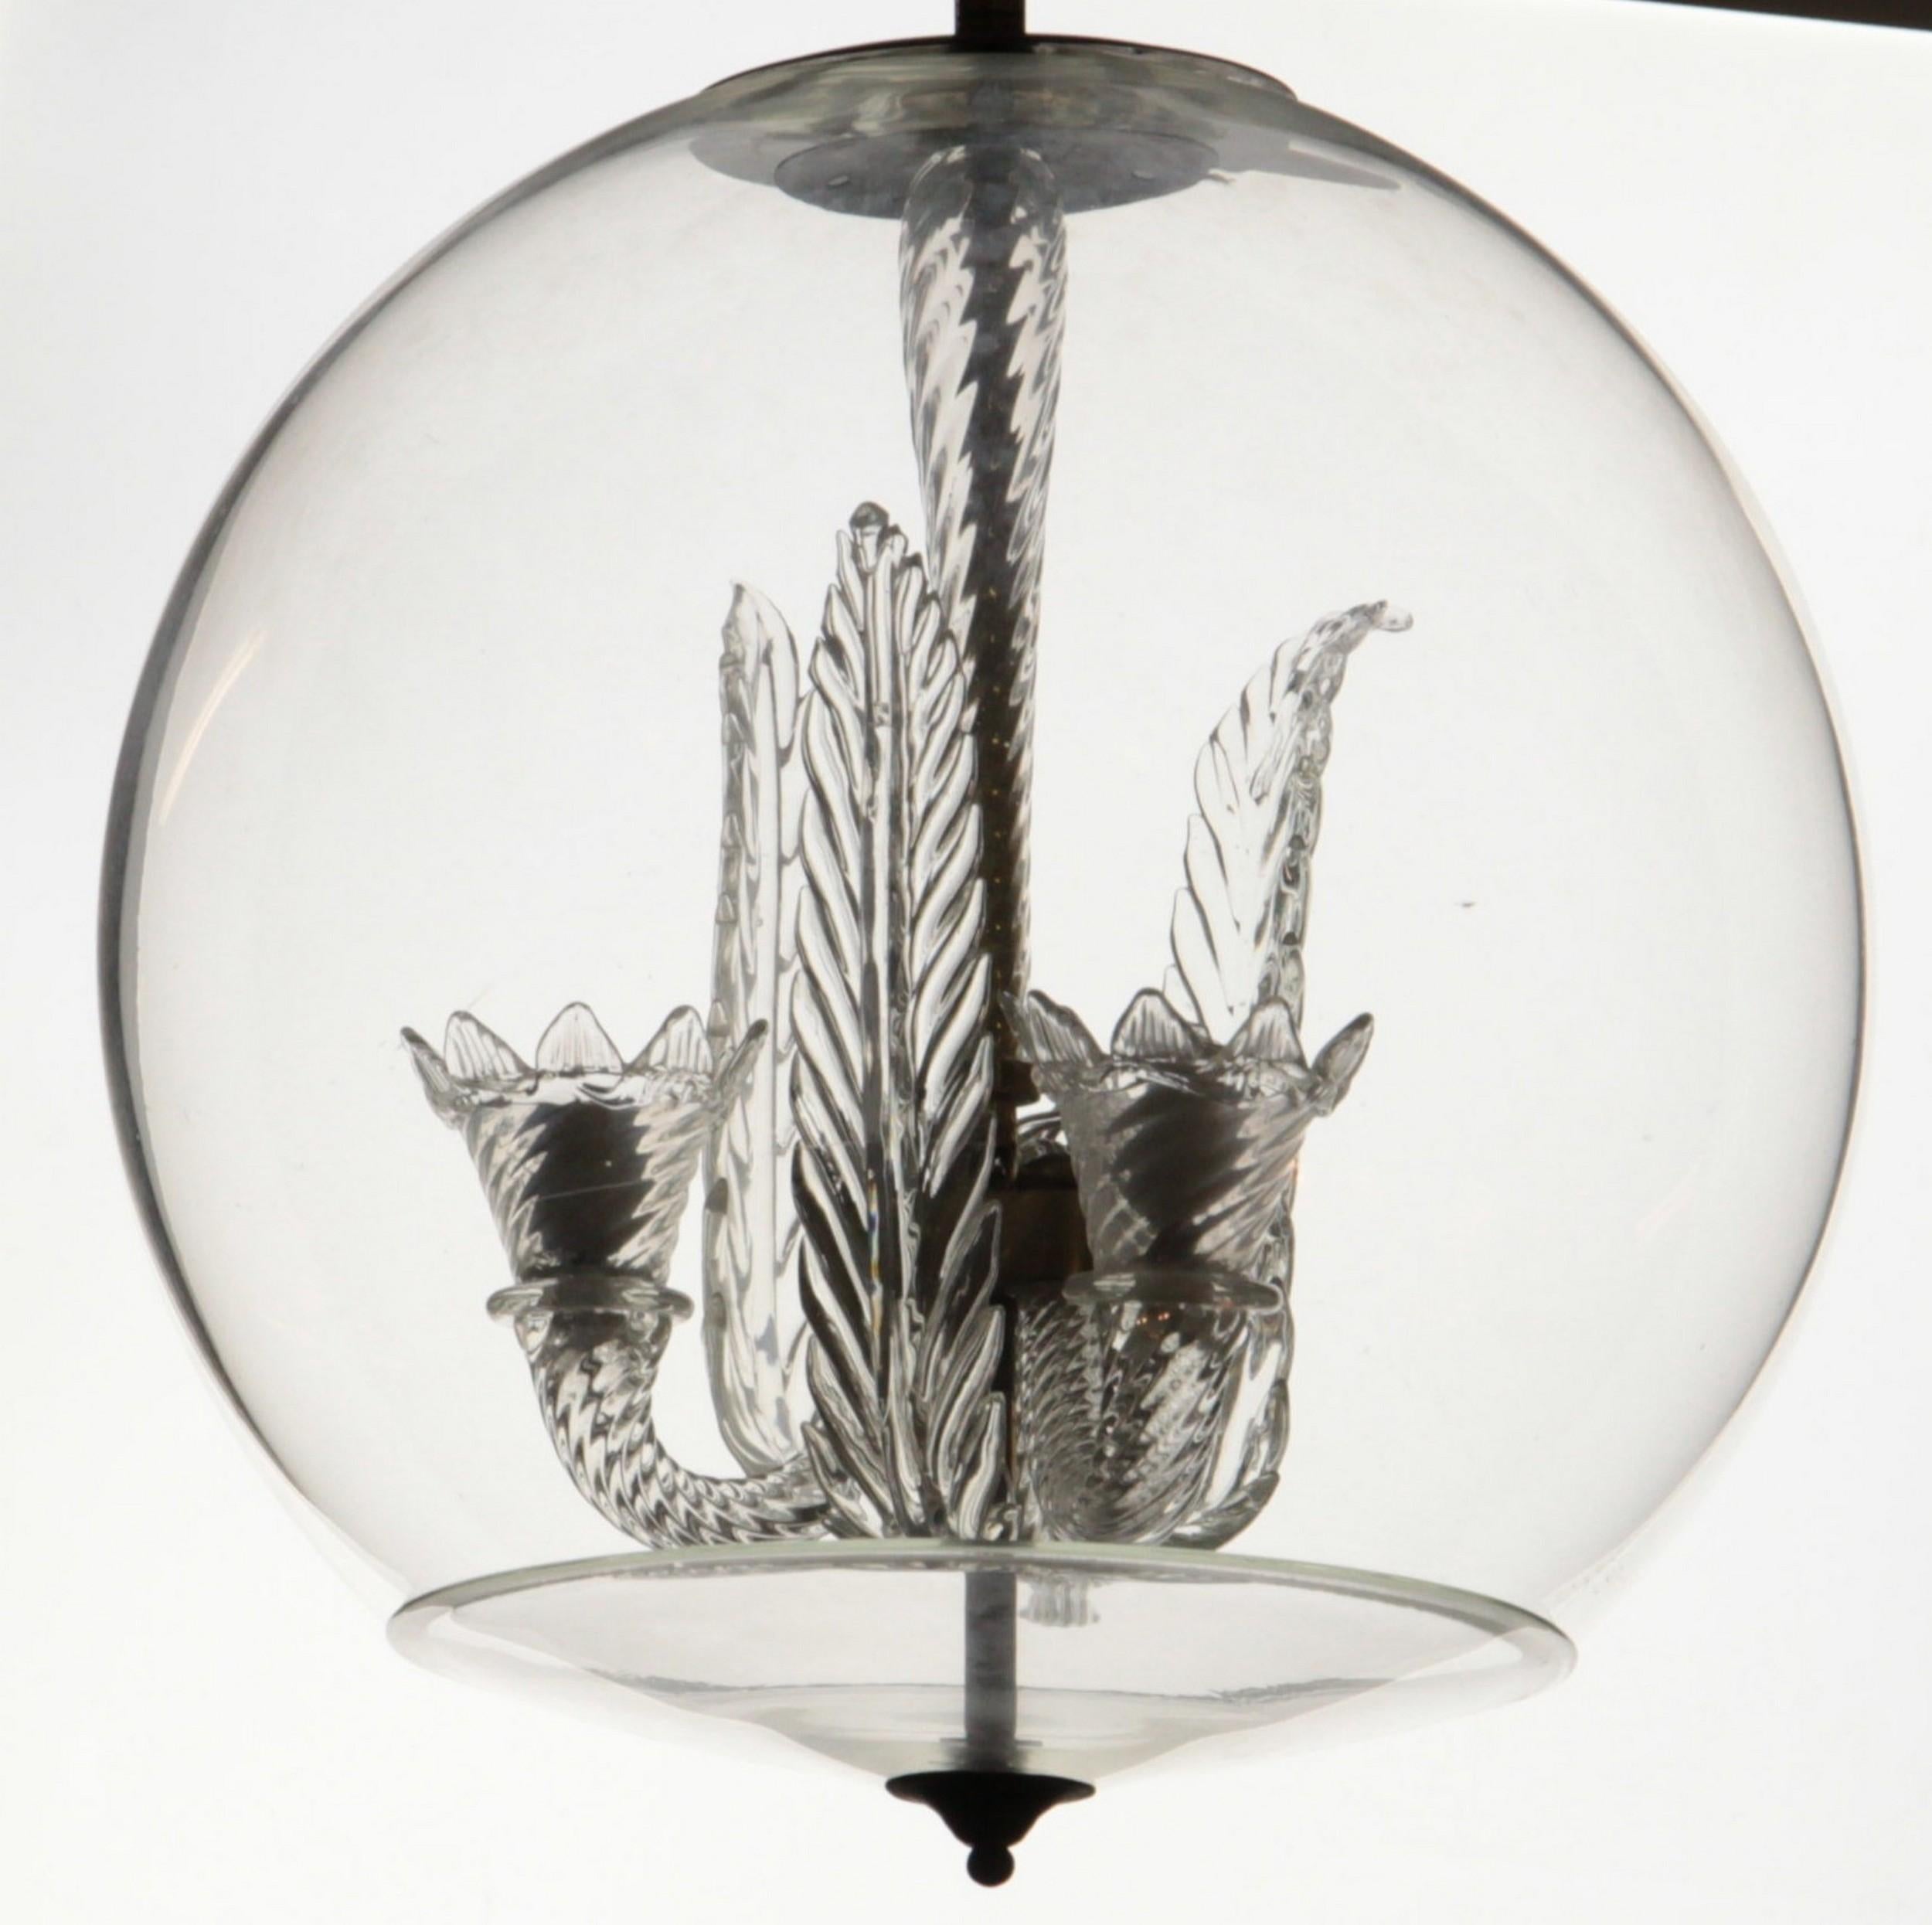 European Tommaso Buzzi for Venini, Three Arms Chandelier Inside a Glass Sphere, 1930s